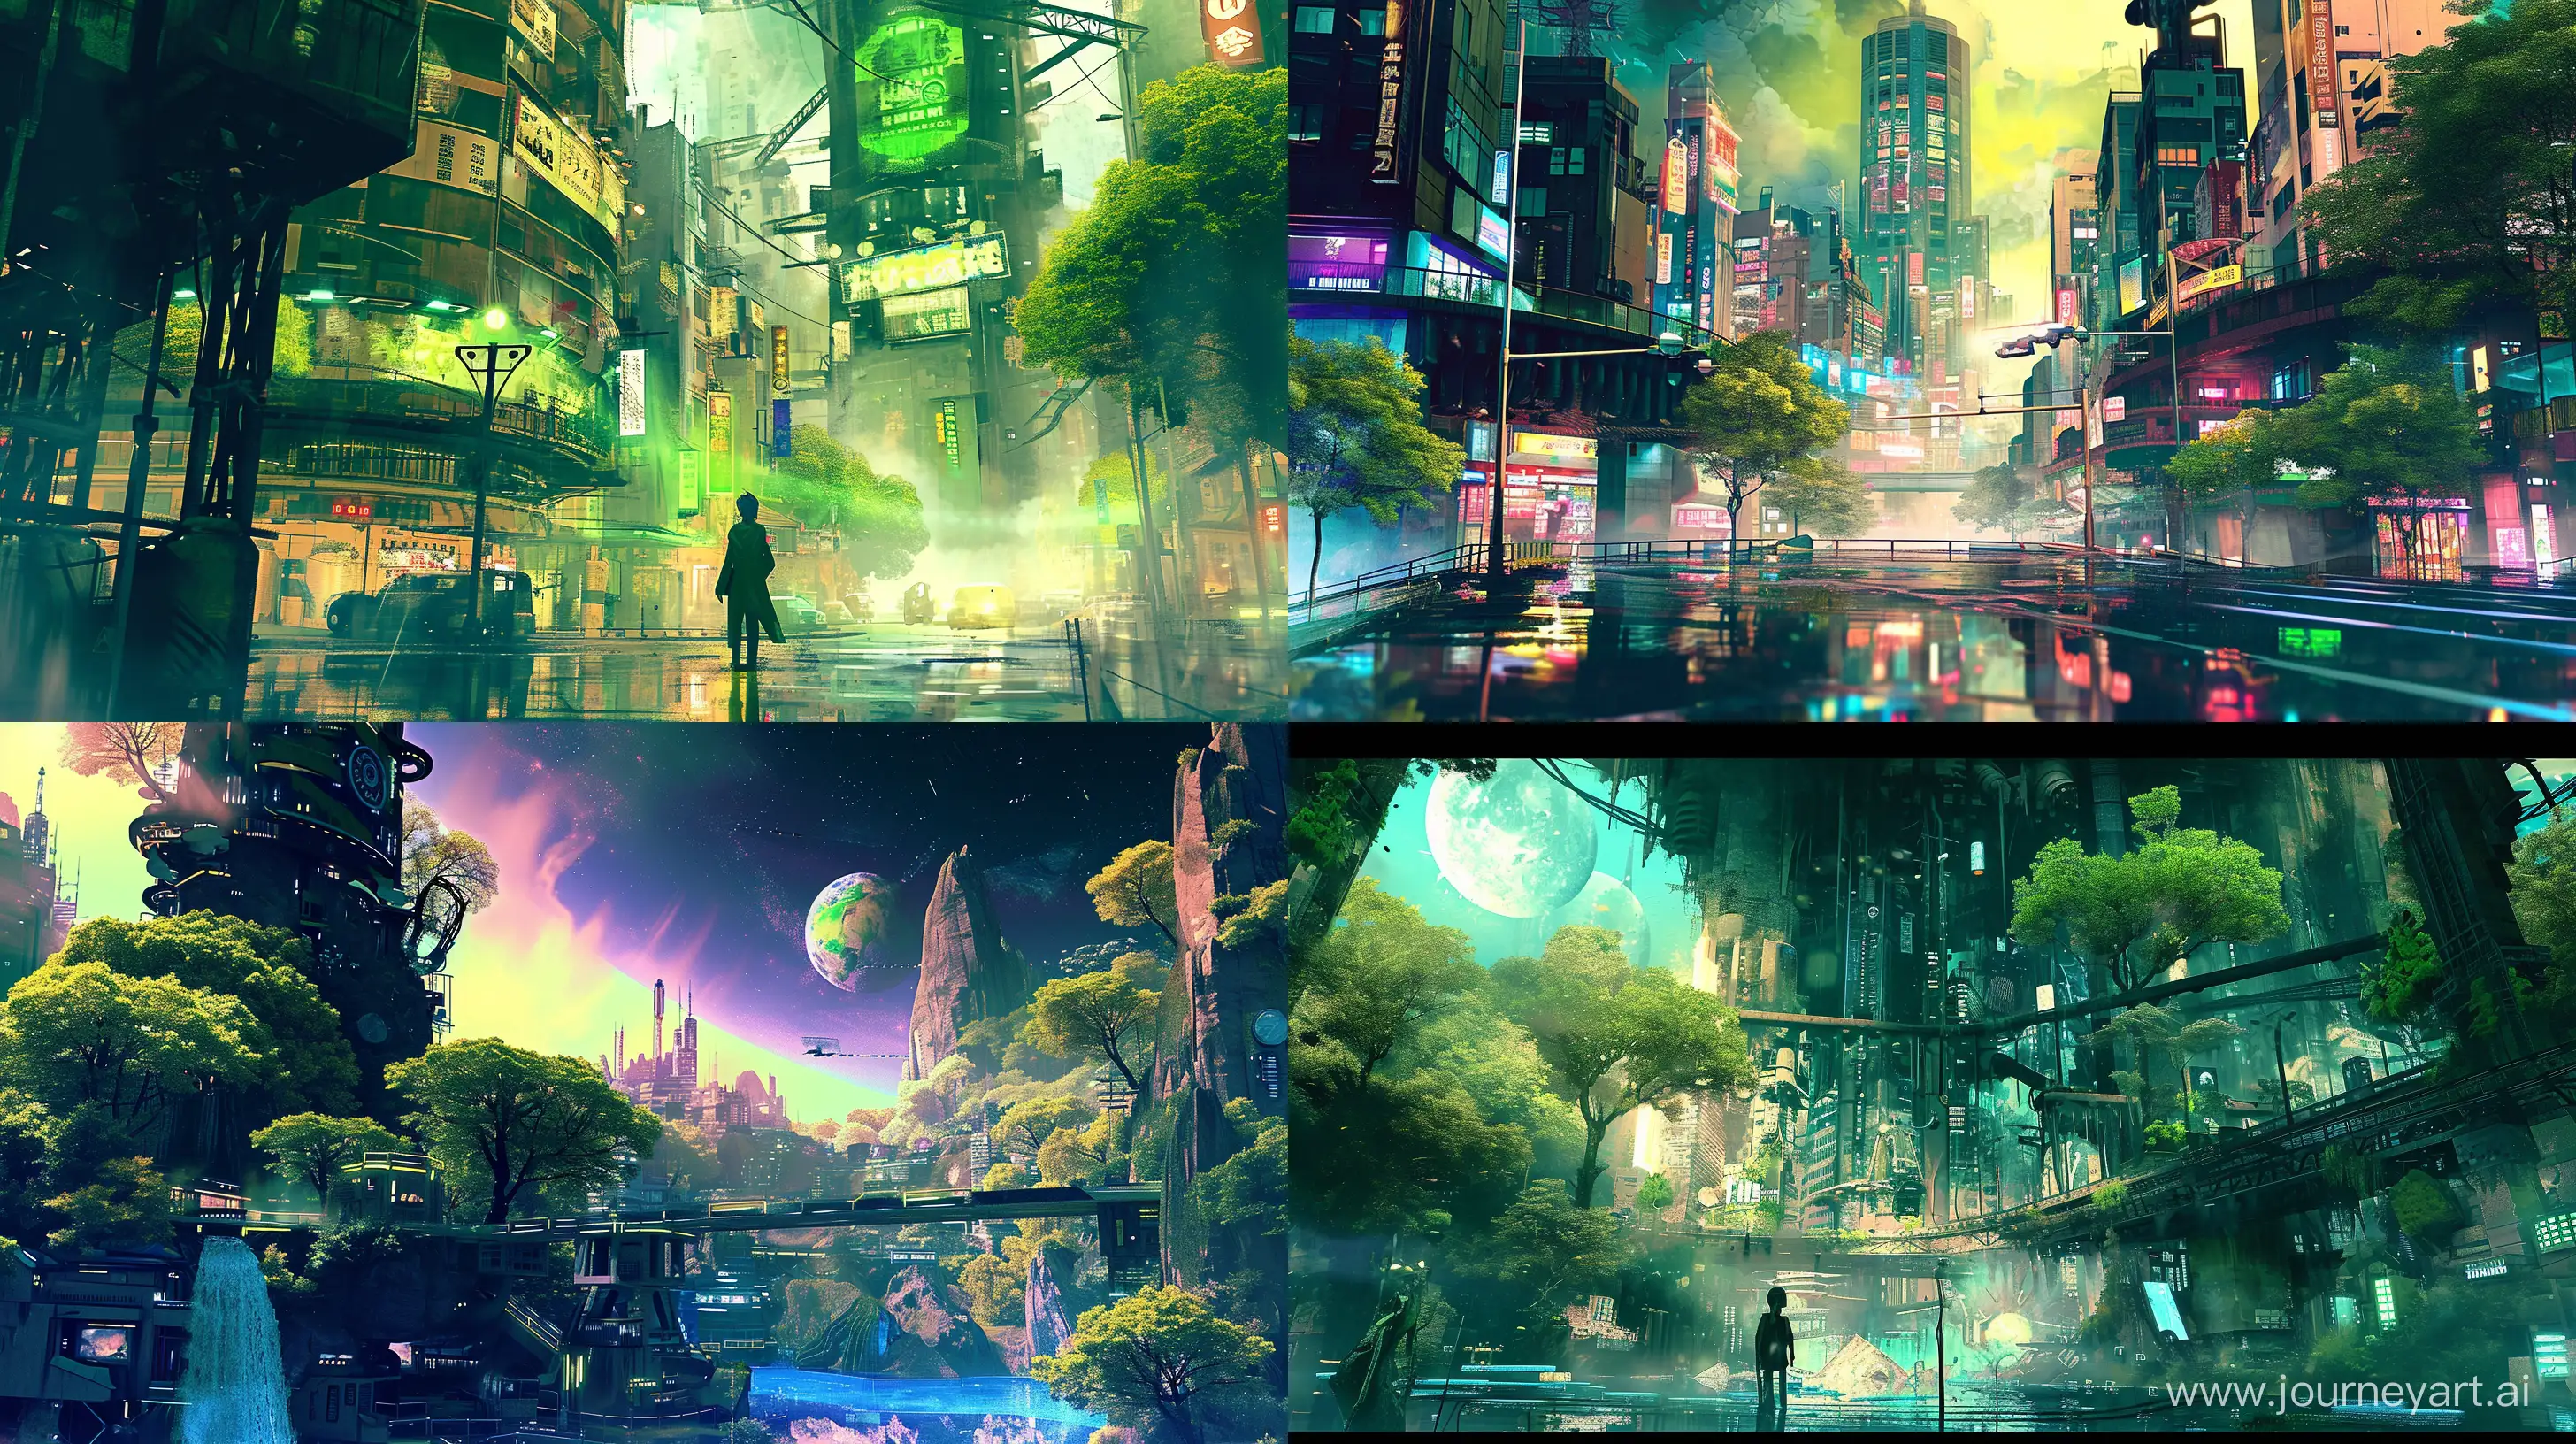 Vibrant-Green-Cityscape-under-Blacklight-Urban-Artistic-Expression-in-8K